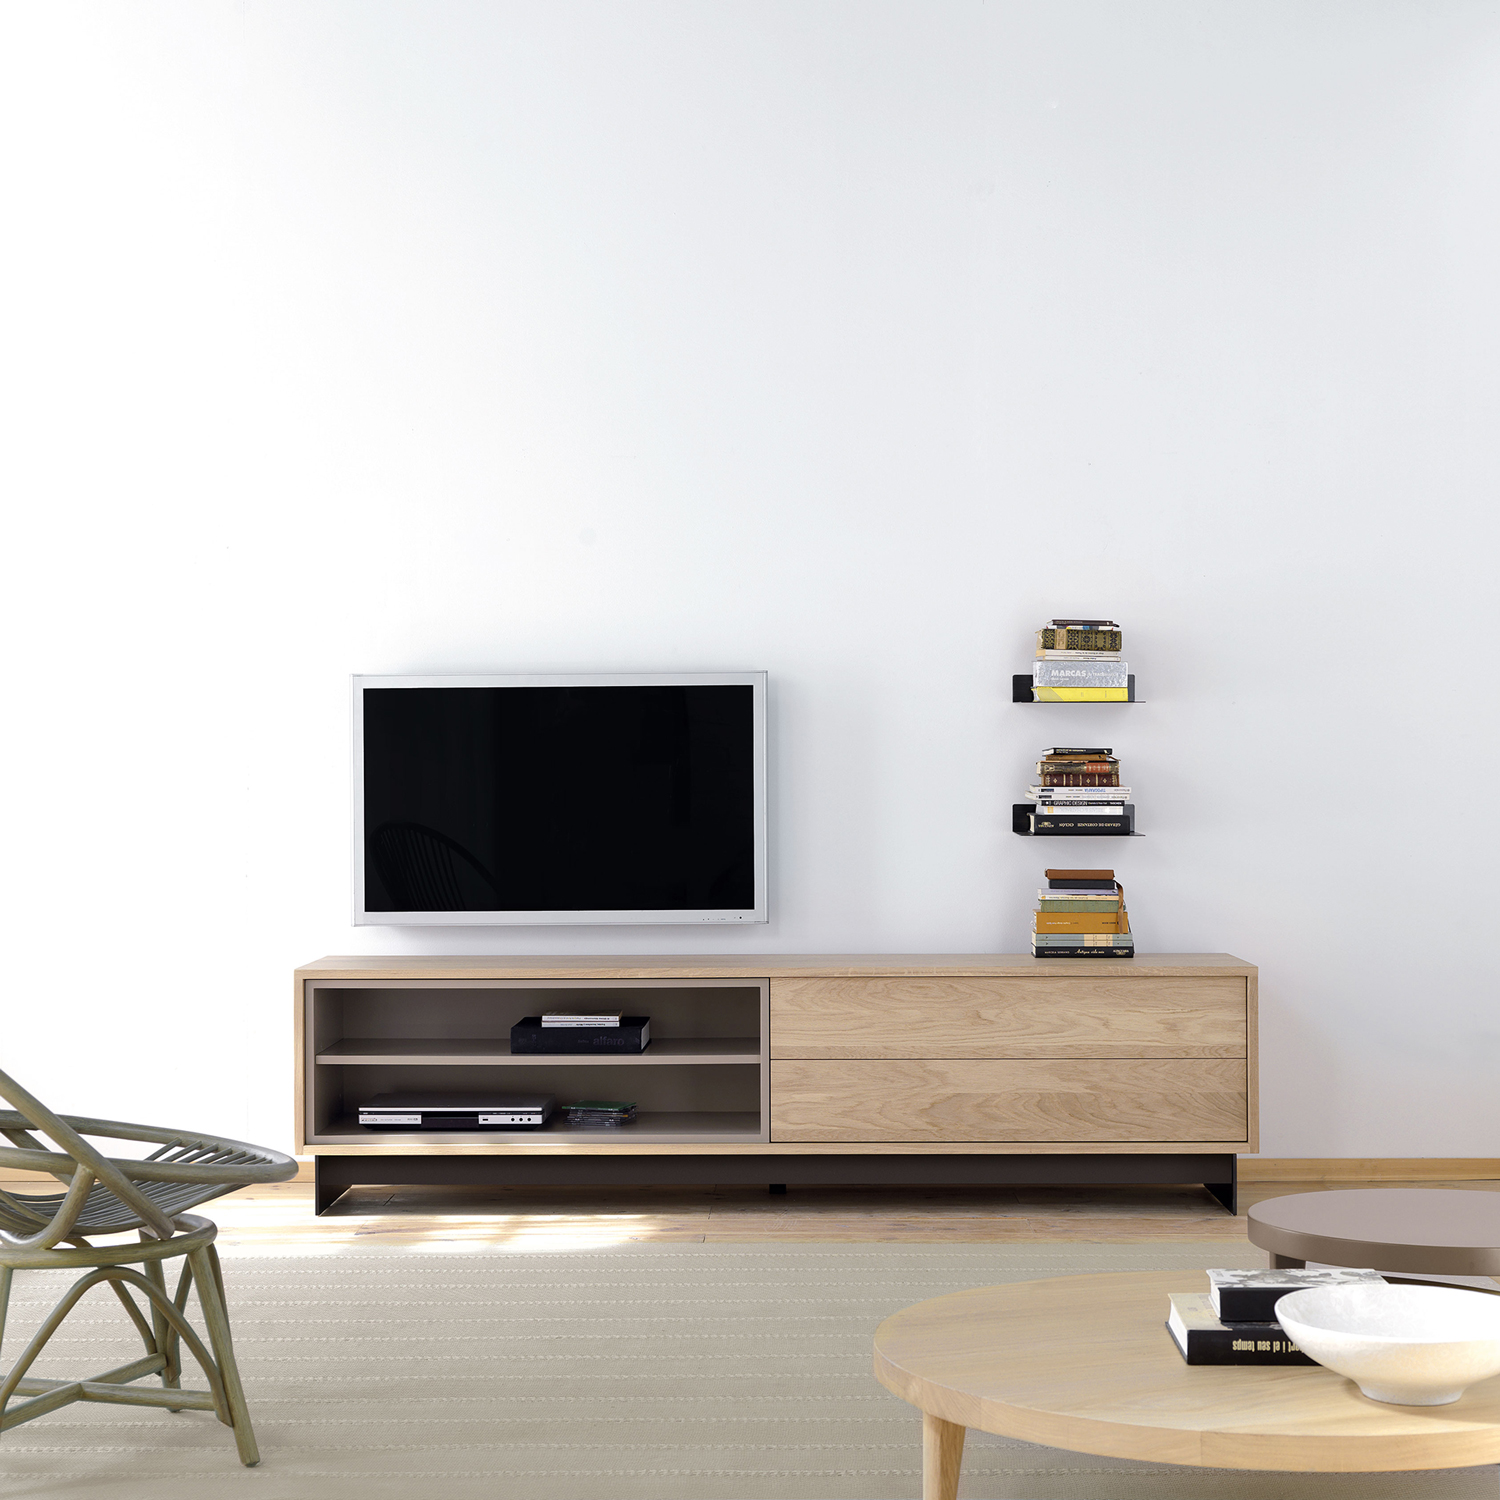 muebles de interior - almacenaje - mueble tv basic